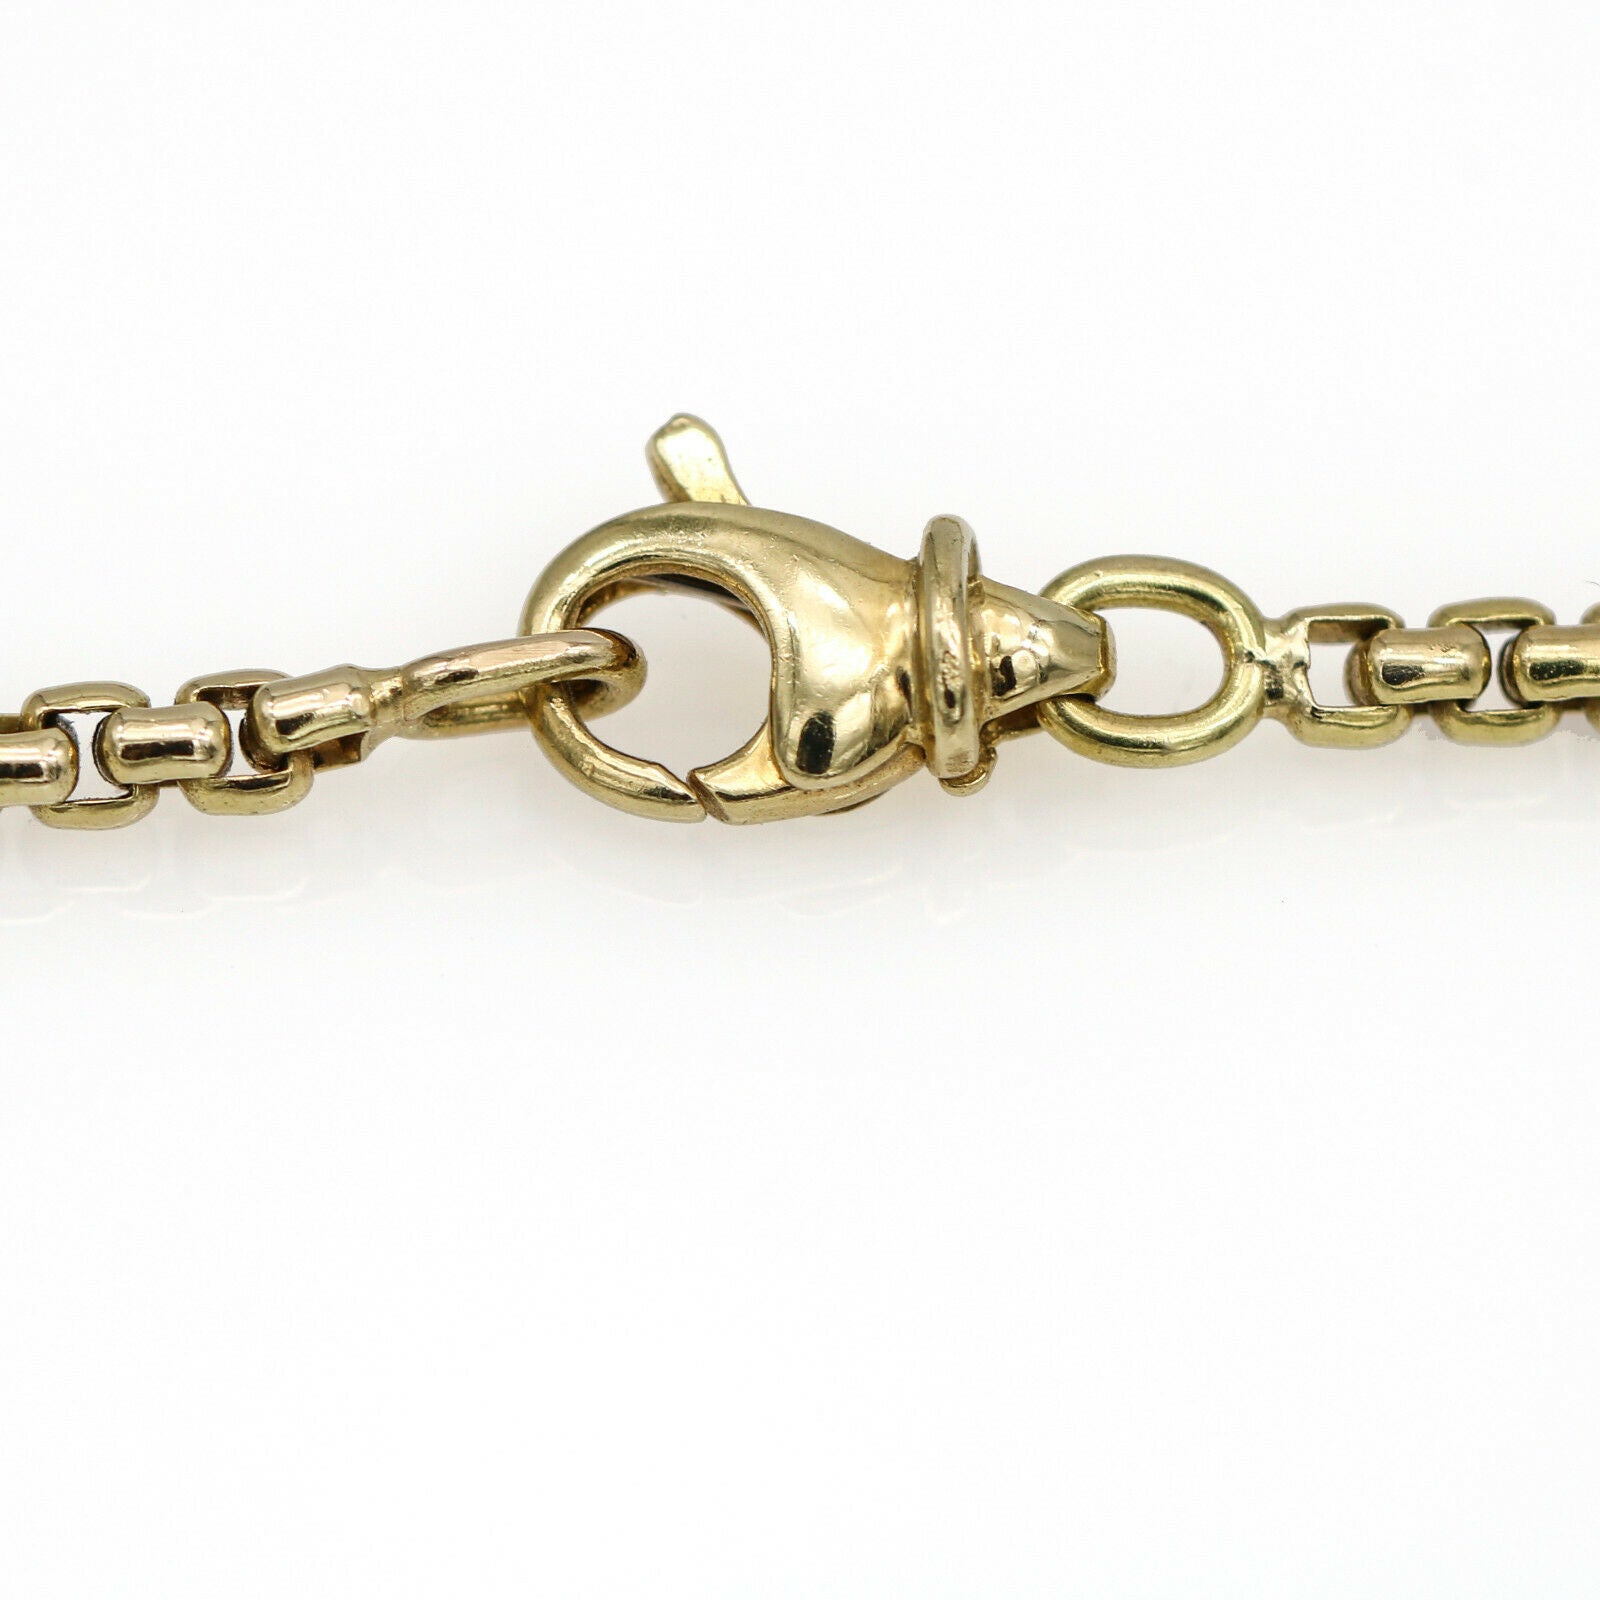 David Yurman Diamond Acorn Pendant Necklace in 18k Yellow Gold